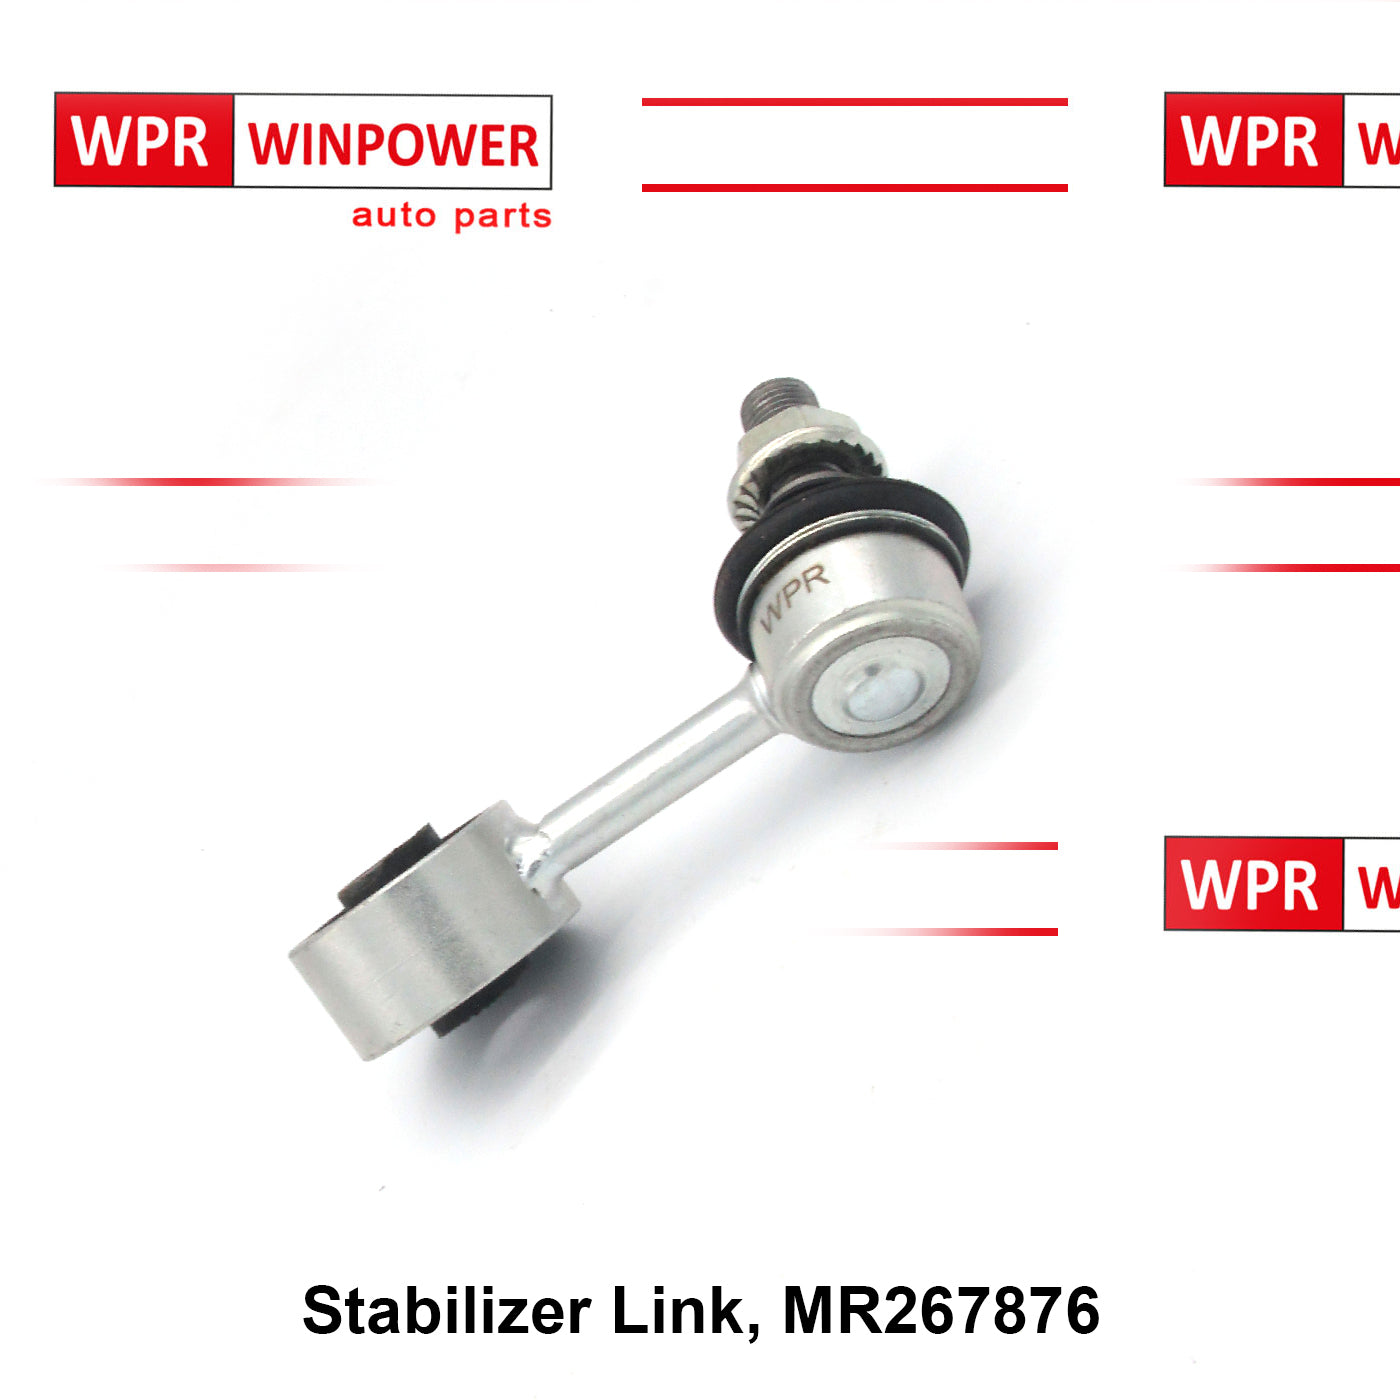 Stabilizer Link၊ WPR၊ MR267876၊ SL-MI0009 (004805) - MITSUBISHI PAJERO 1992 V46V